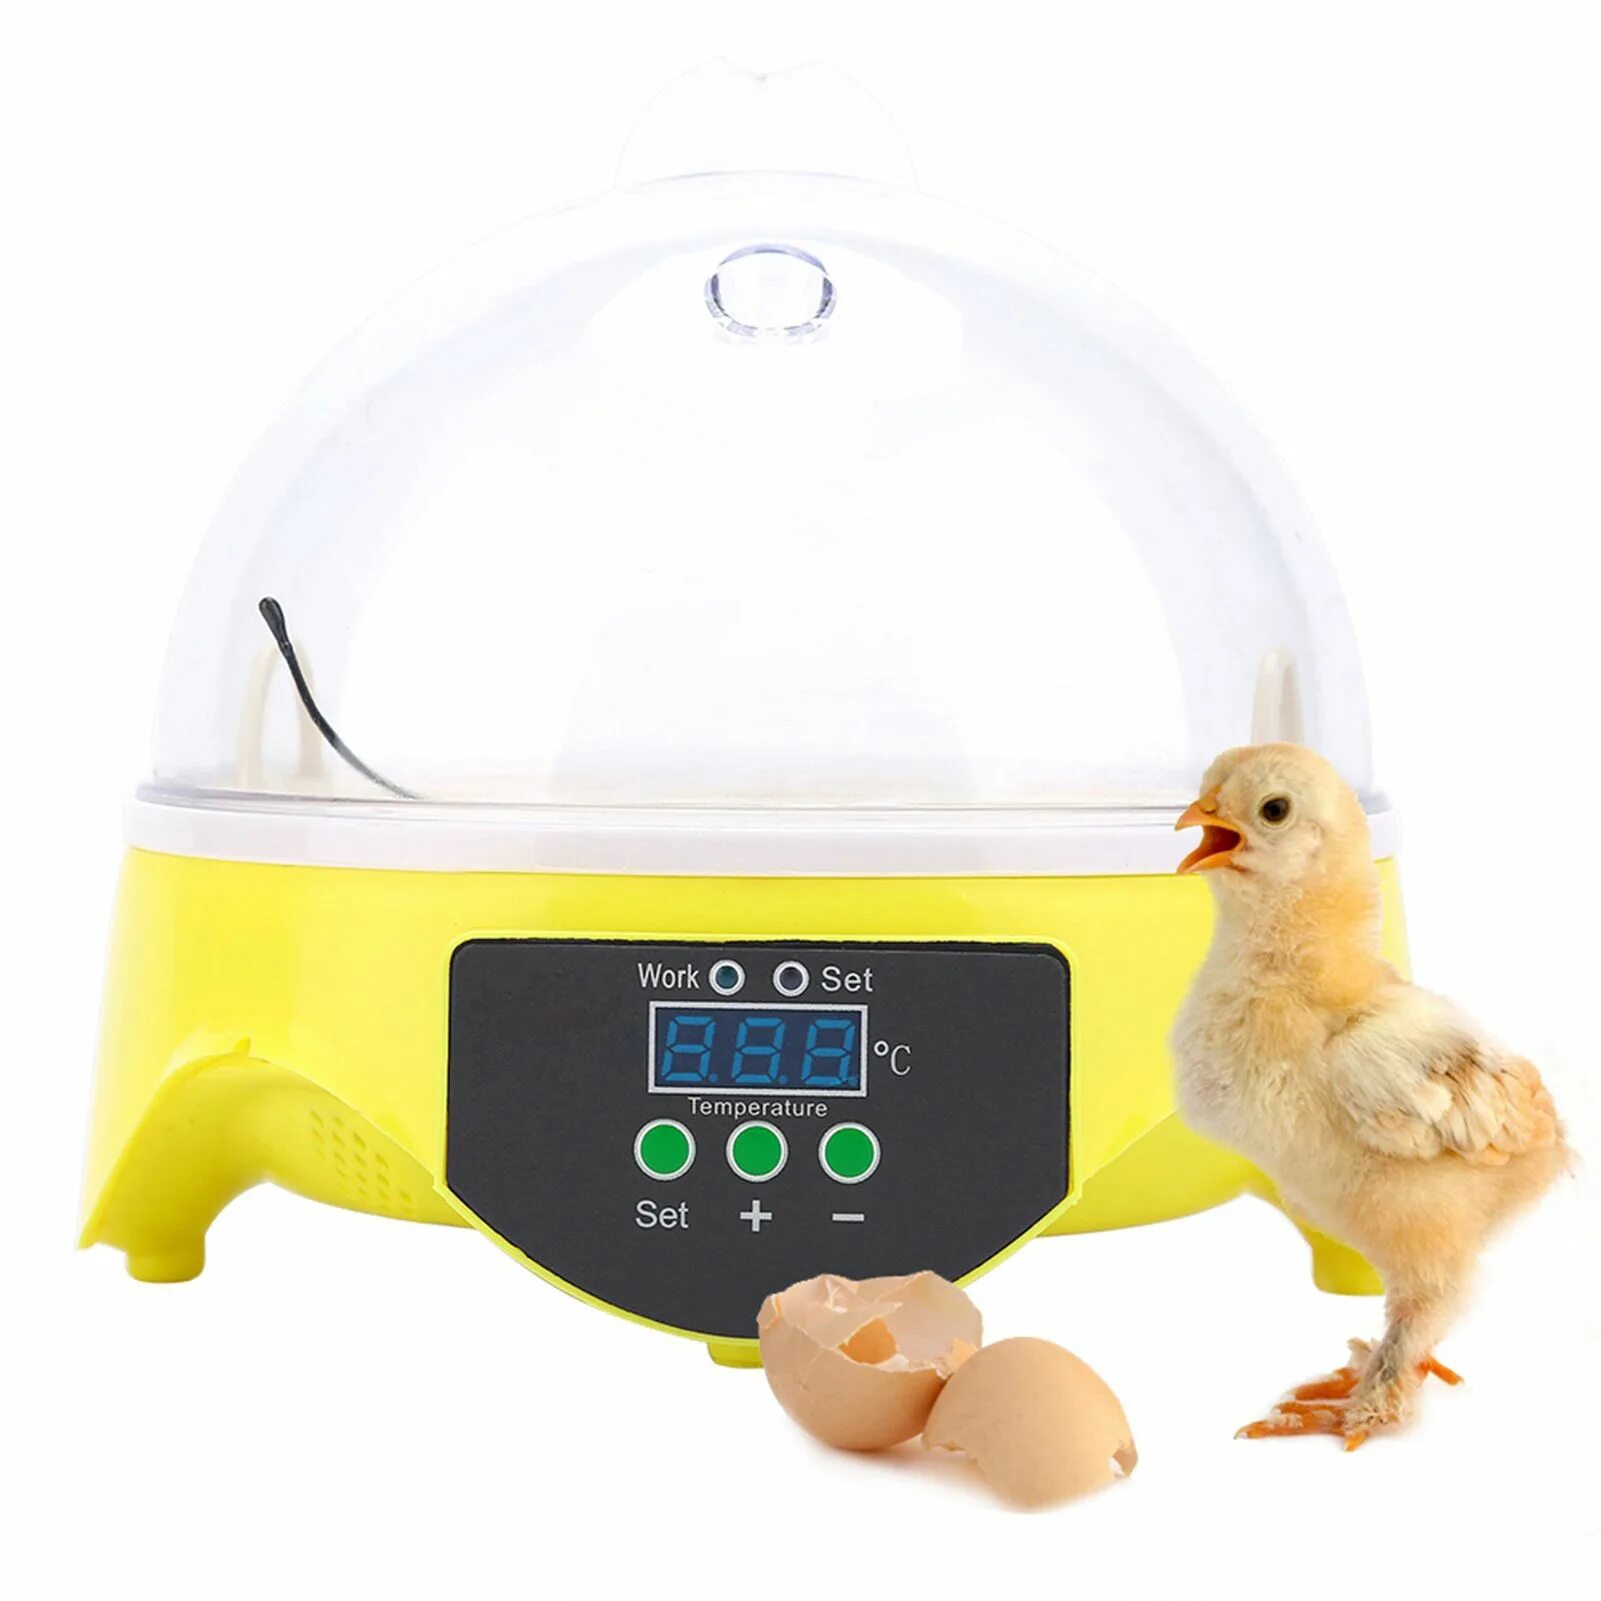 Купить инкубаторы кур. Инкубатор Egg incubator. Инкубатор мини-Брудер. Инкубатор Mini Egg incubator 9 яиц. Инкубатор Egg incubator 6 яиц.